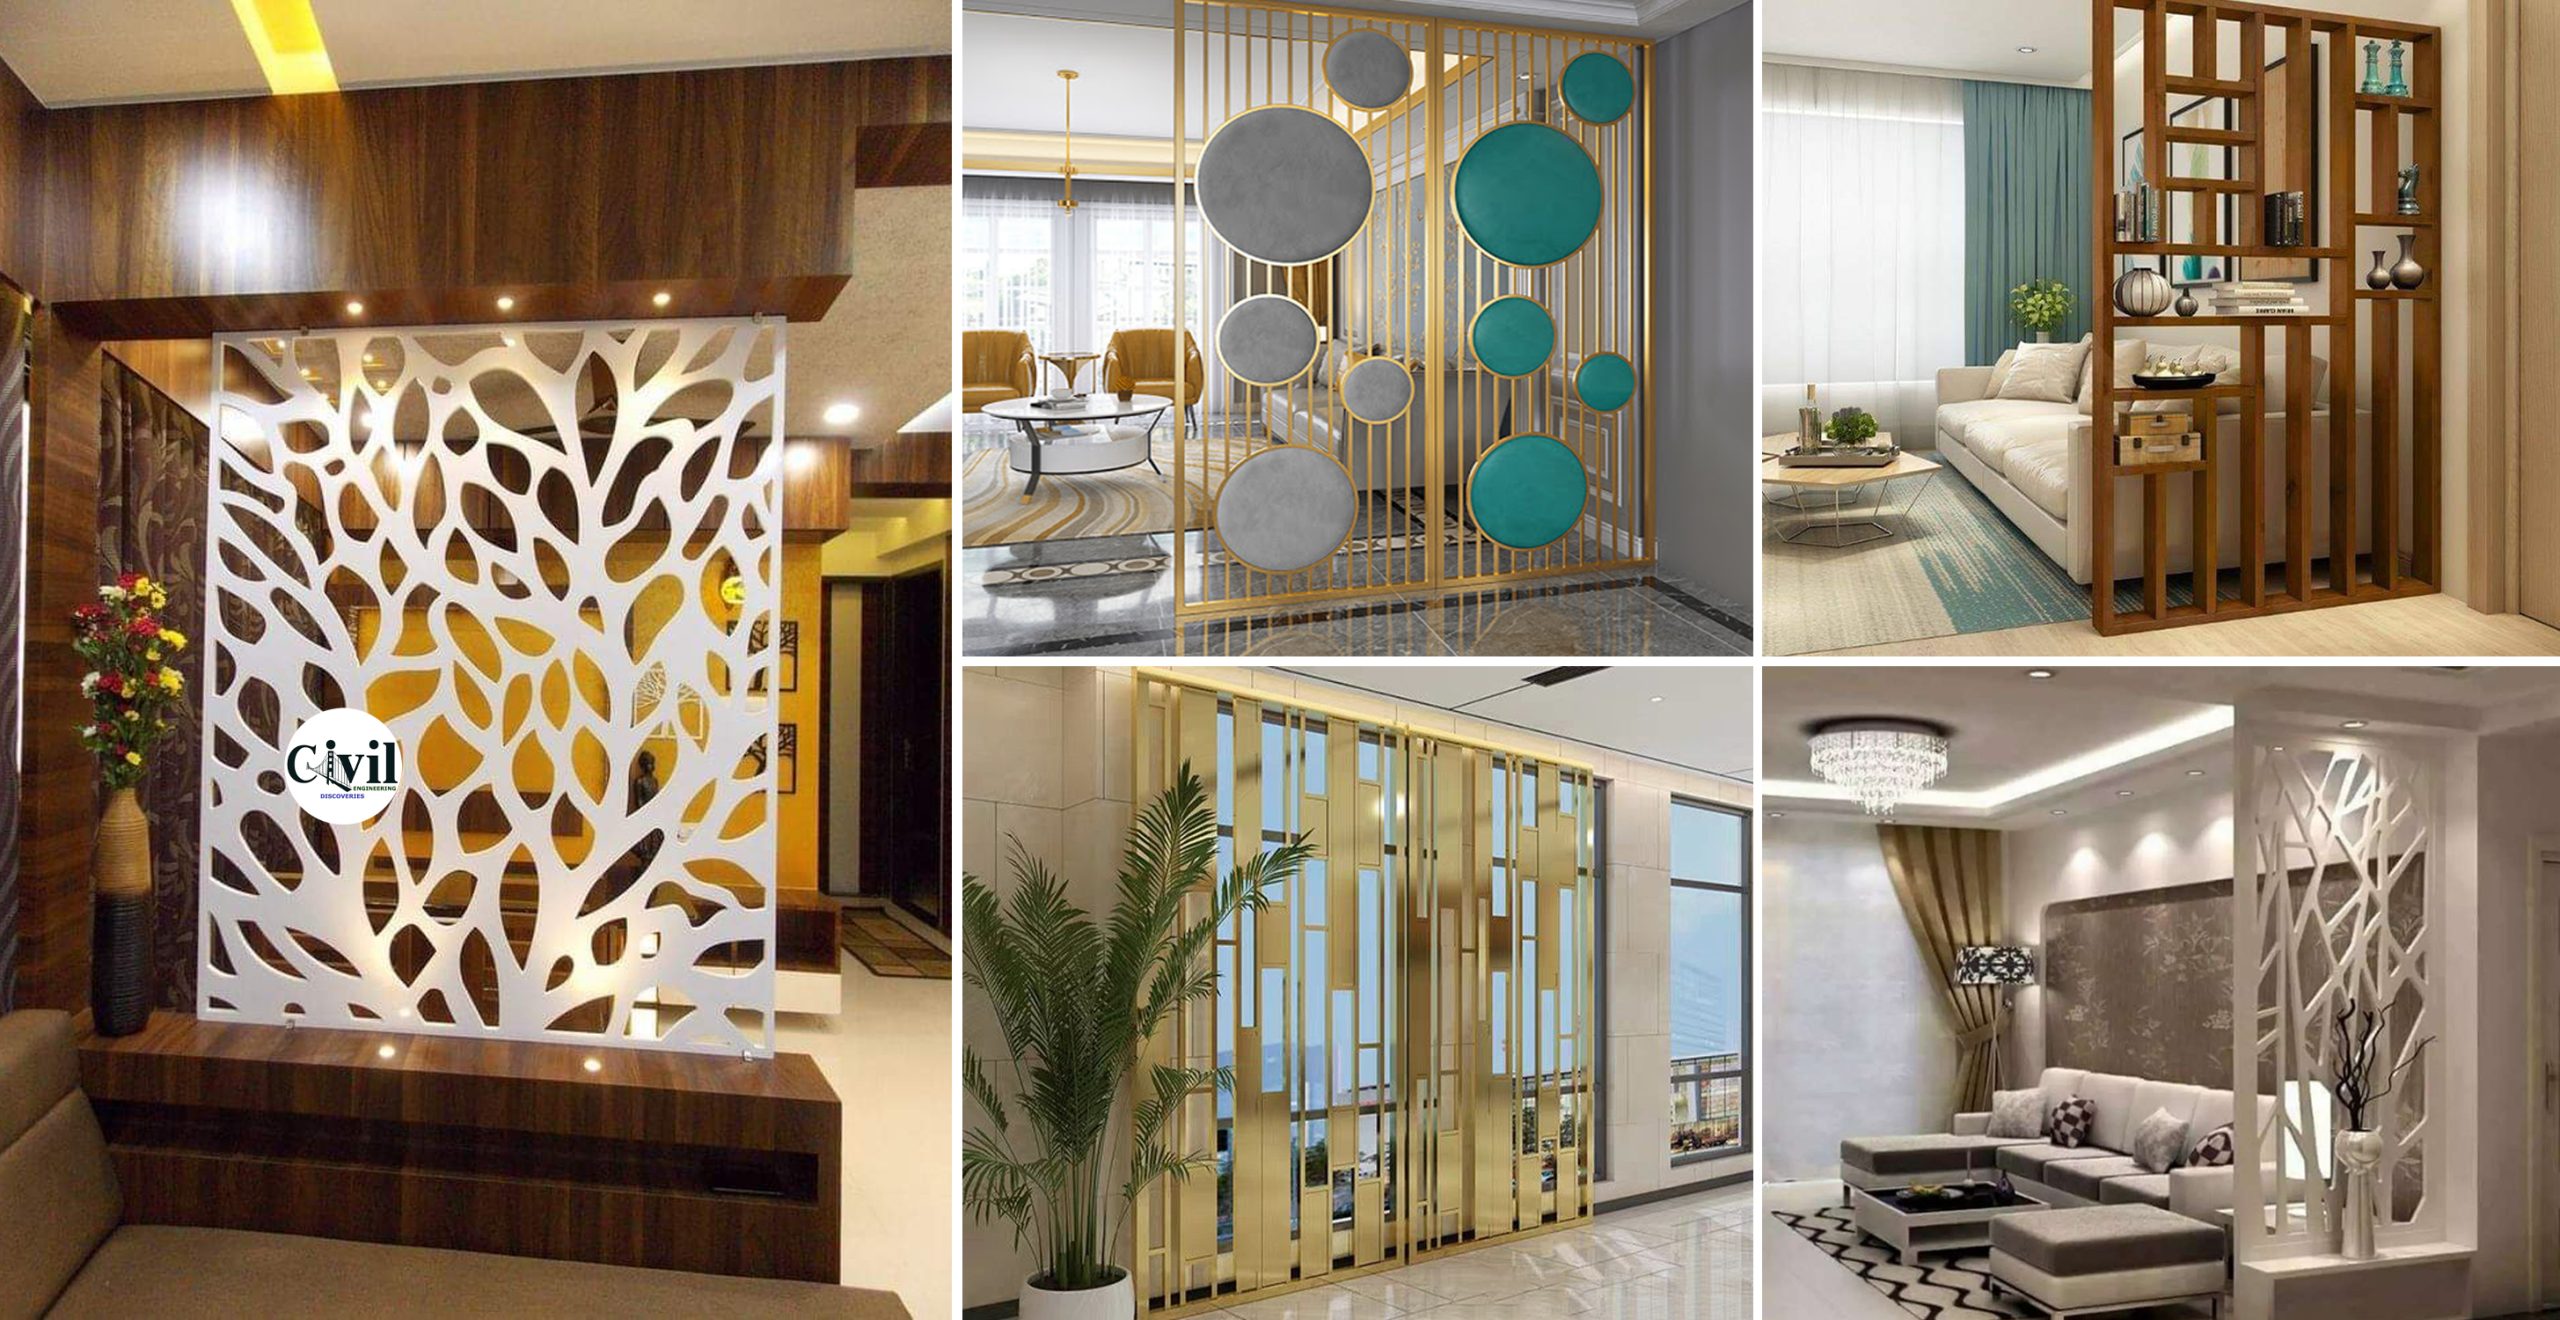 Partition Design Ideas For Your Home | Design Cafe